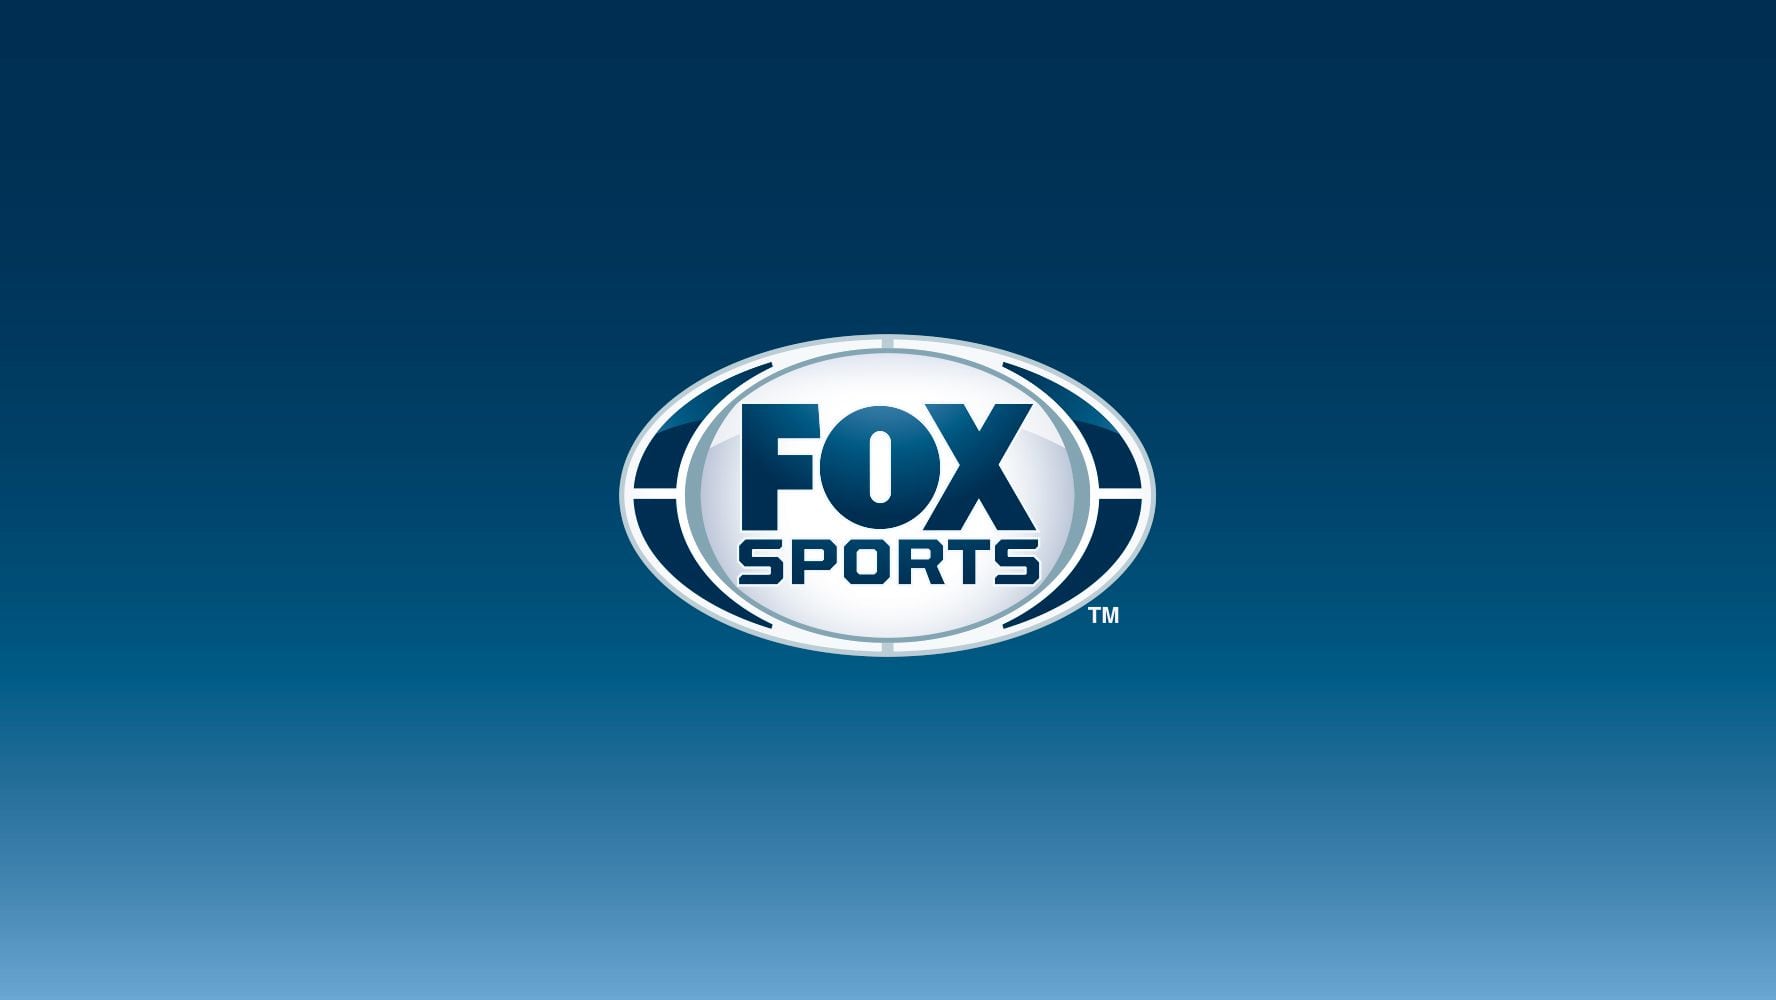 (c) Foxsports.com.mx